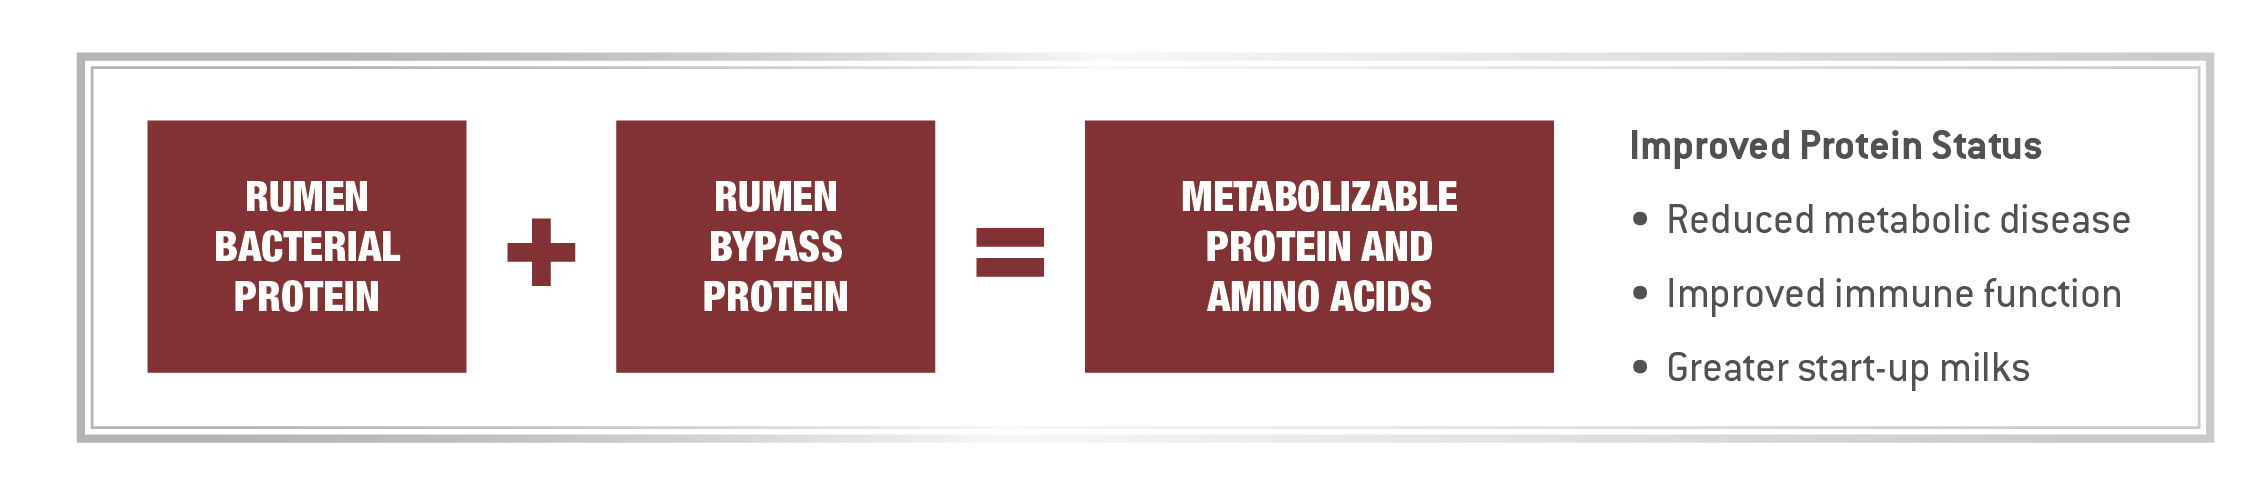 Metabolizable Protein Diagram